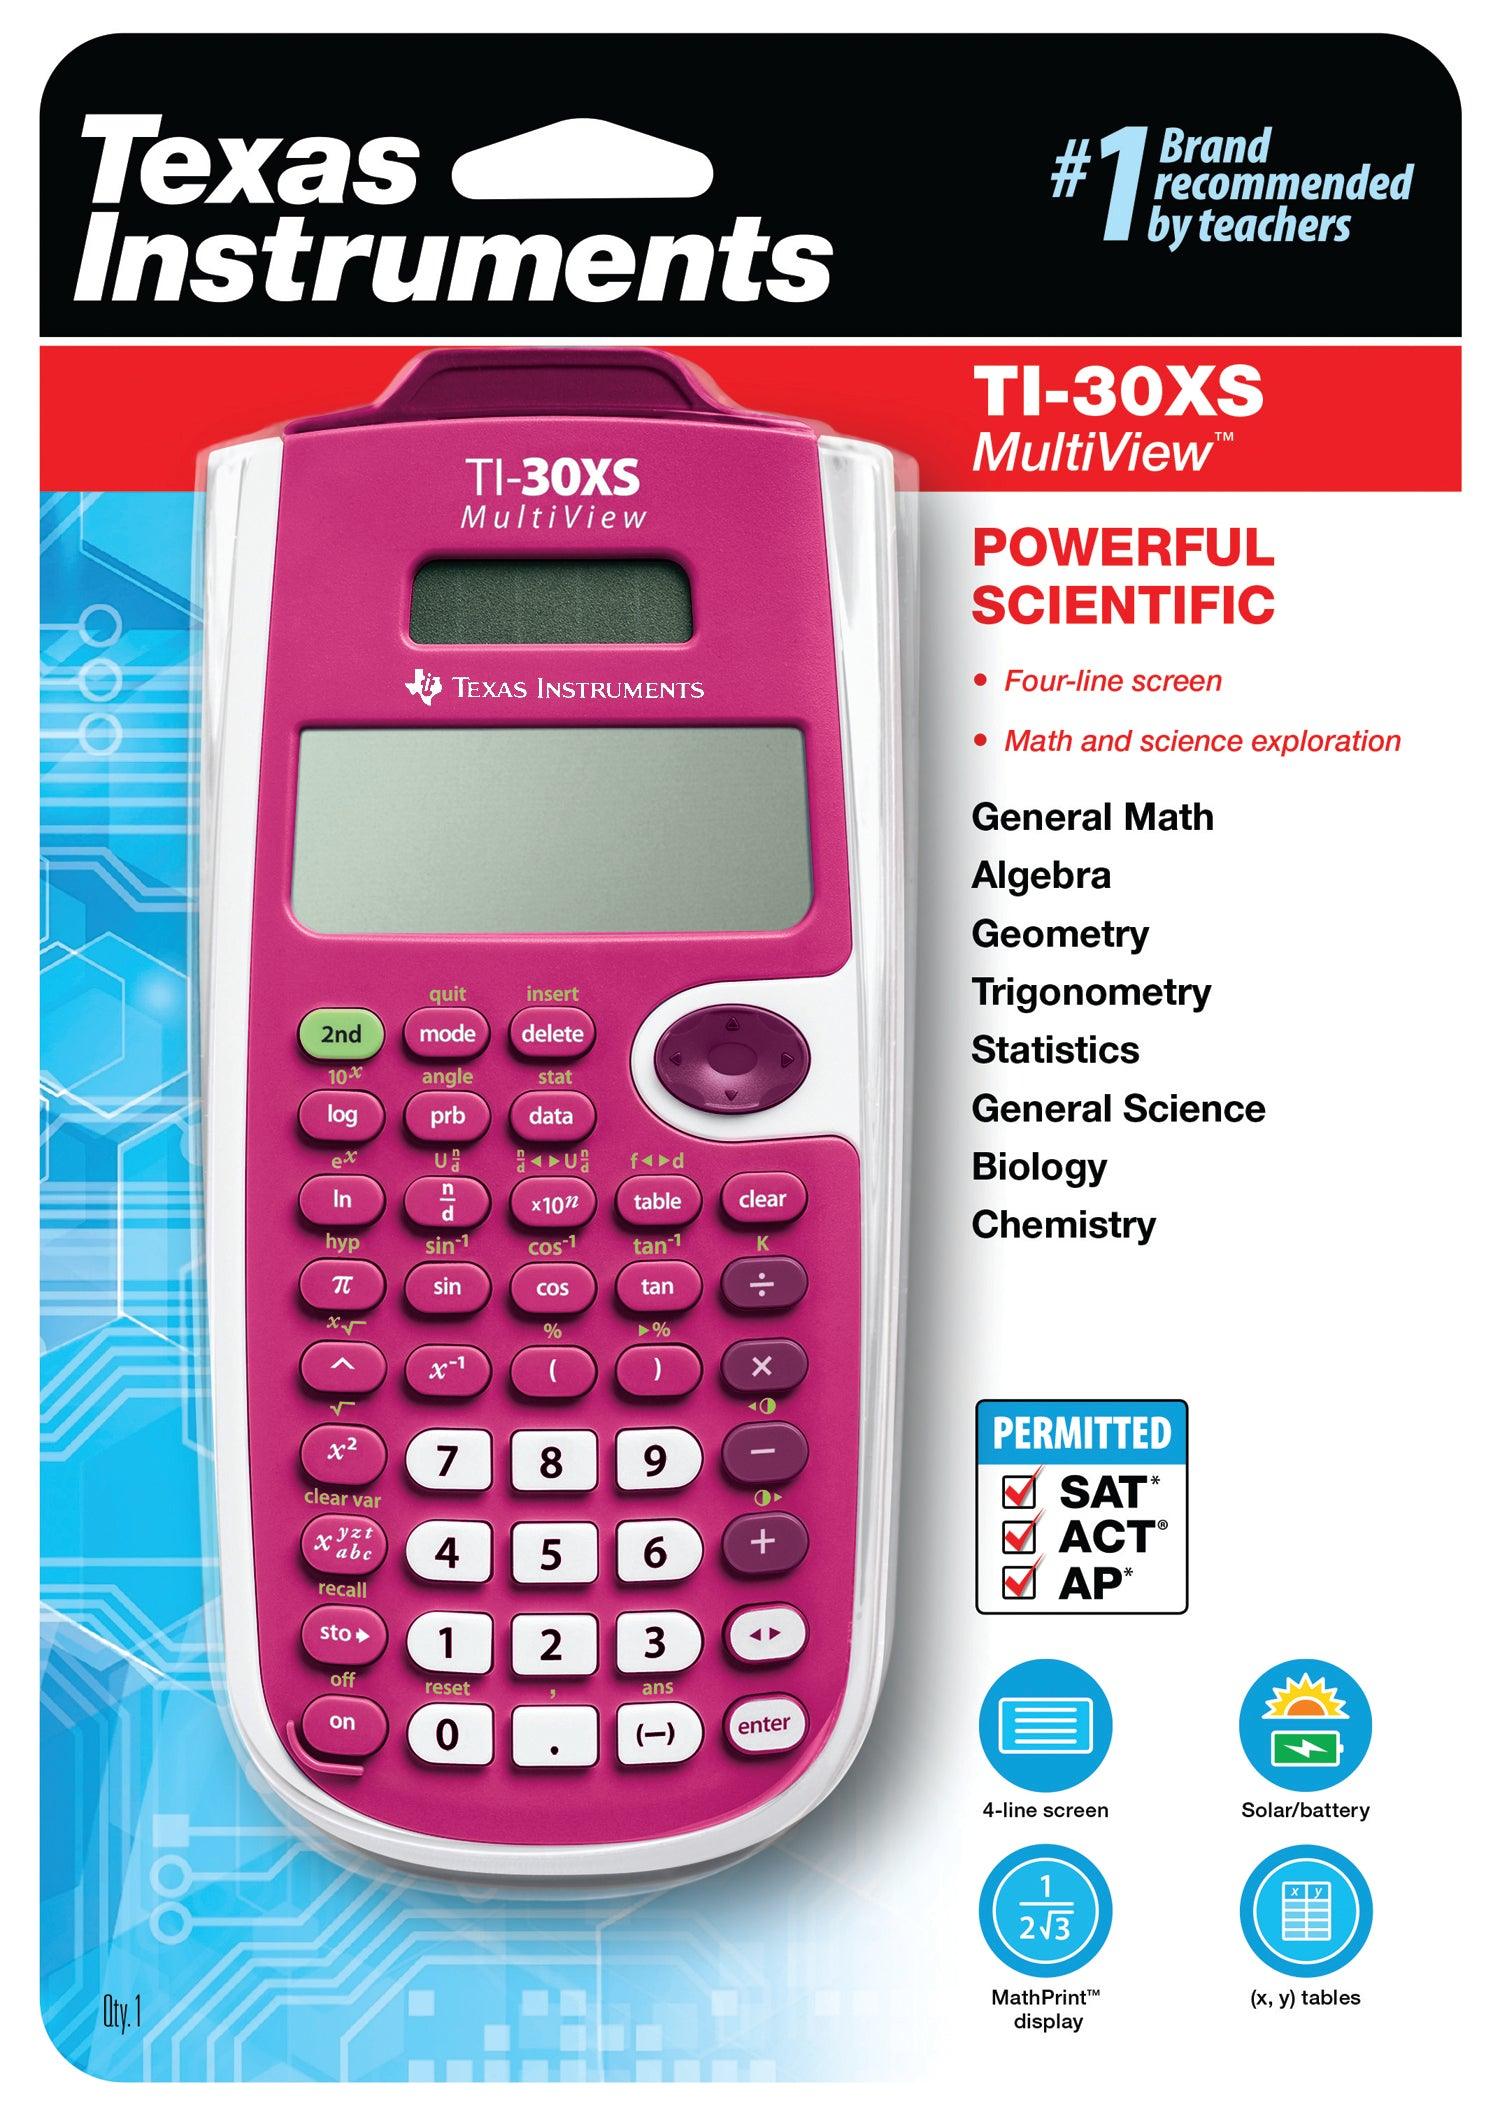 TI-30XS MultiView Scientific Calculator - Pink - Underwood Distributing Co.